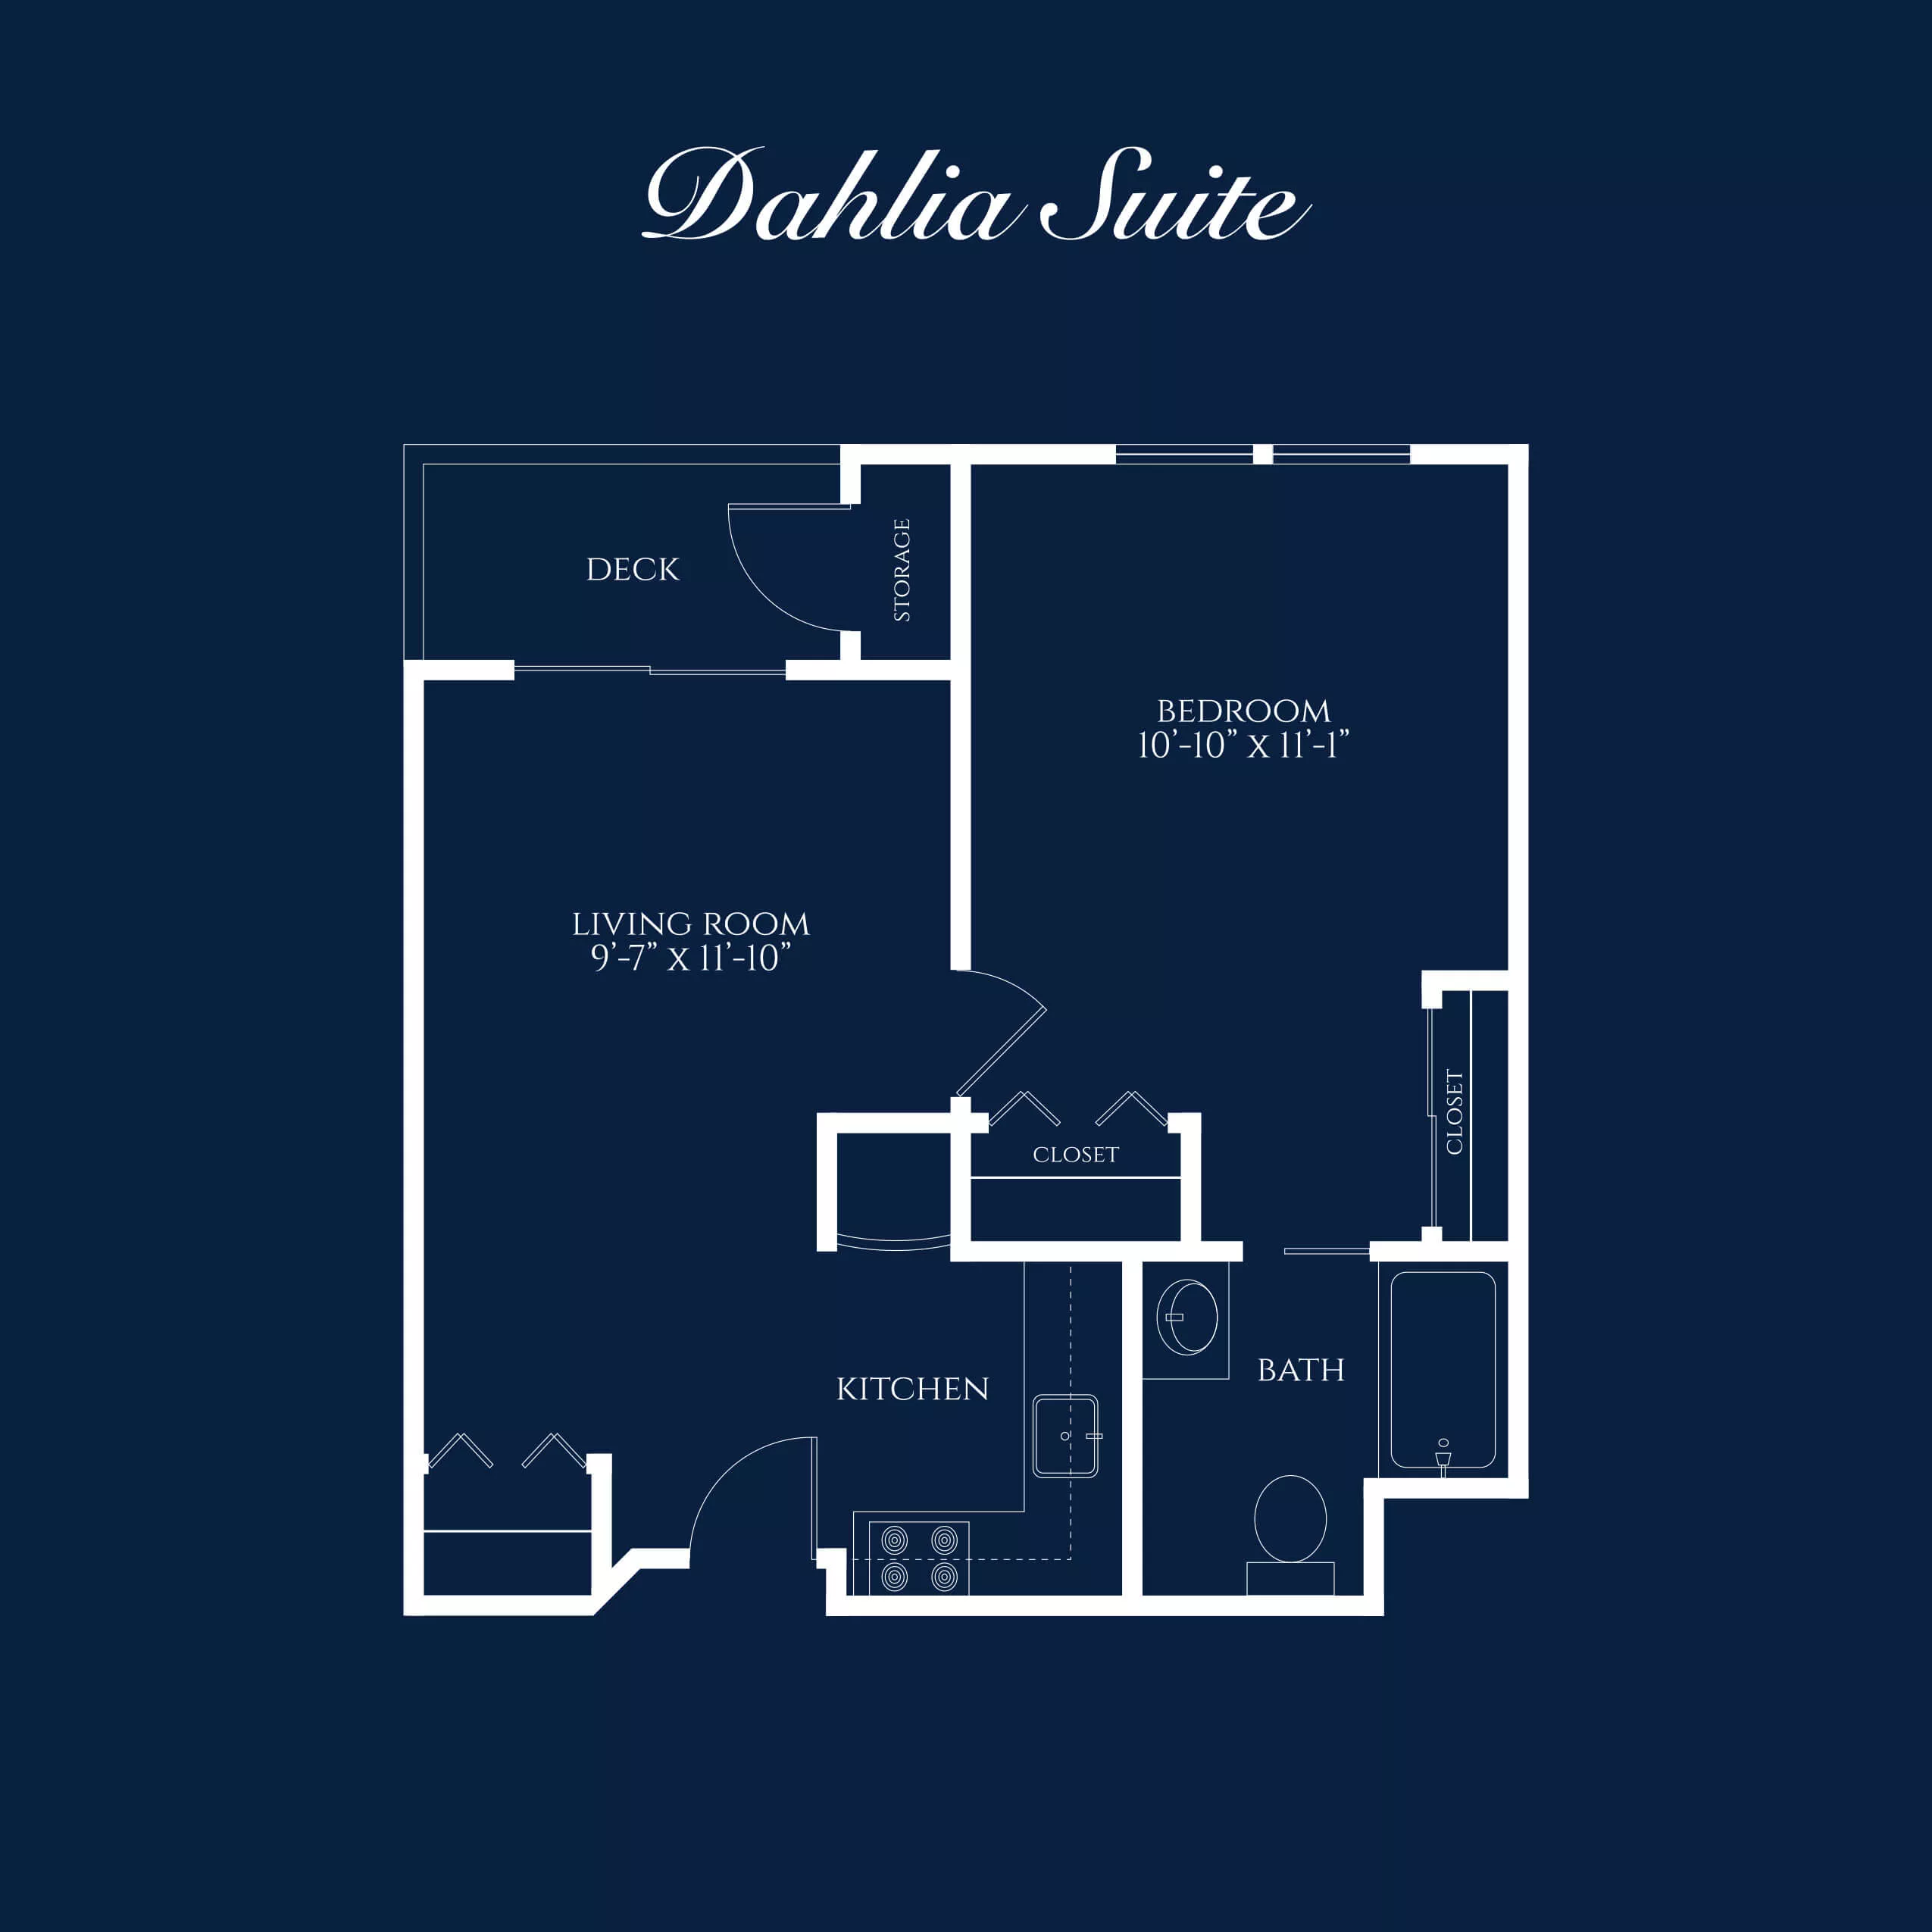 Floorplan of the Dahlia Suite